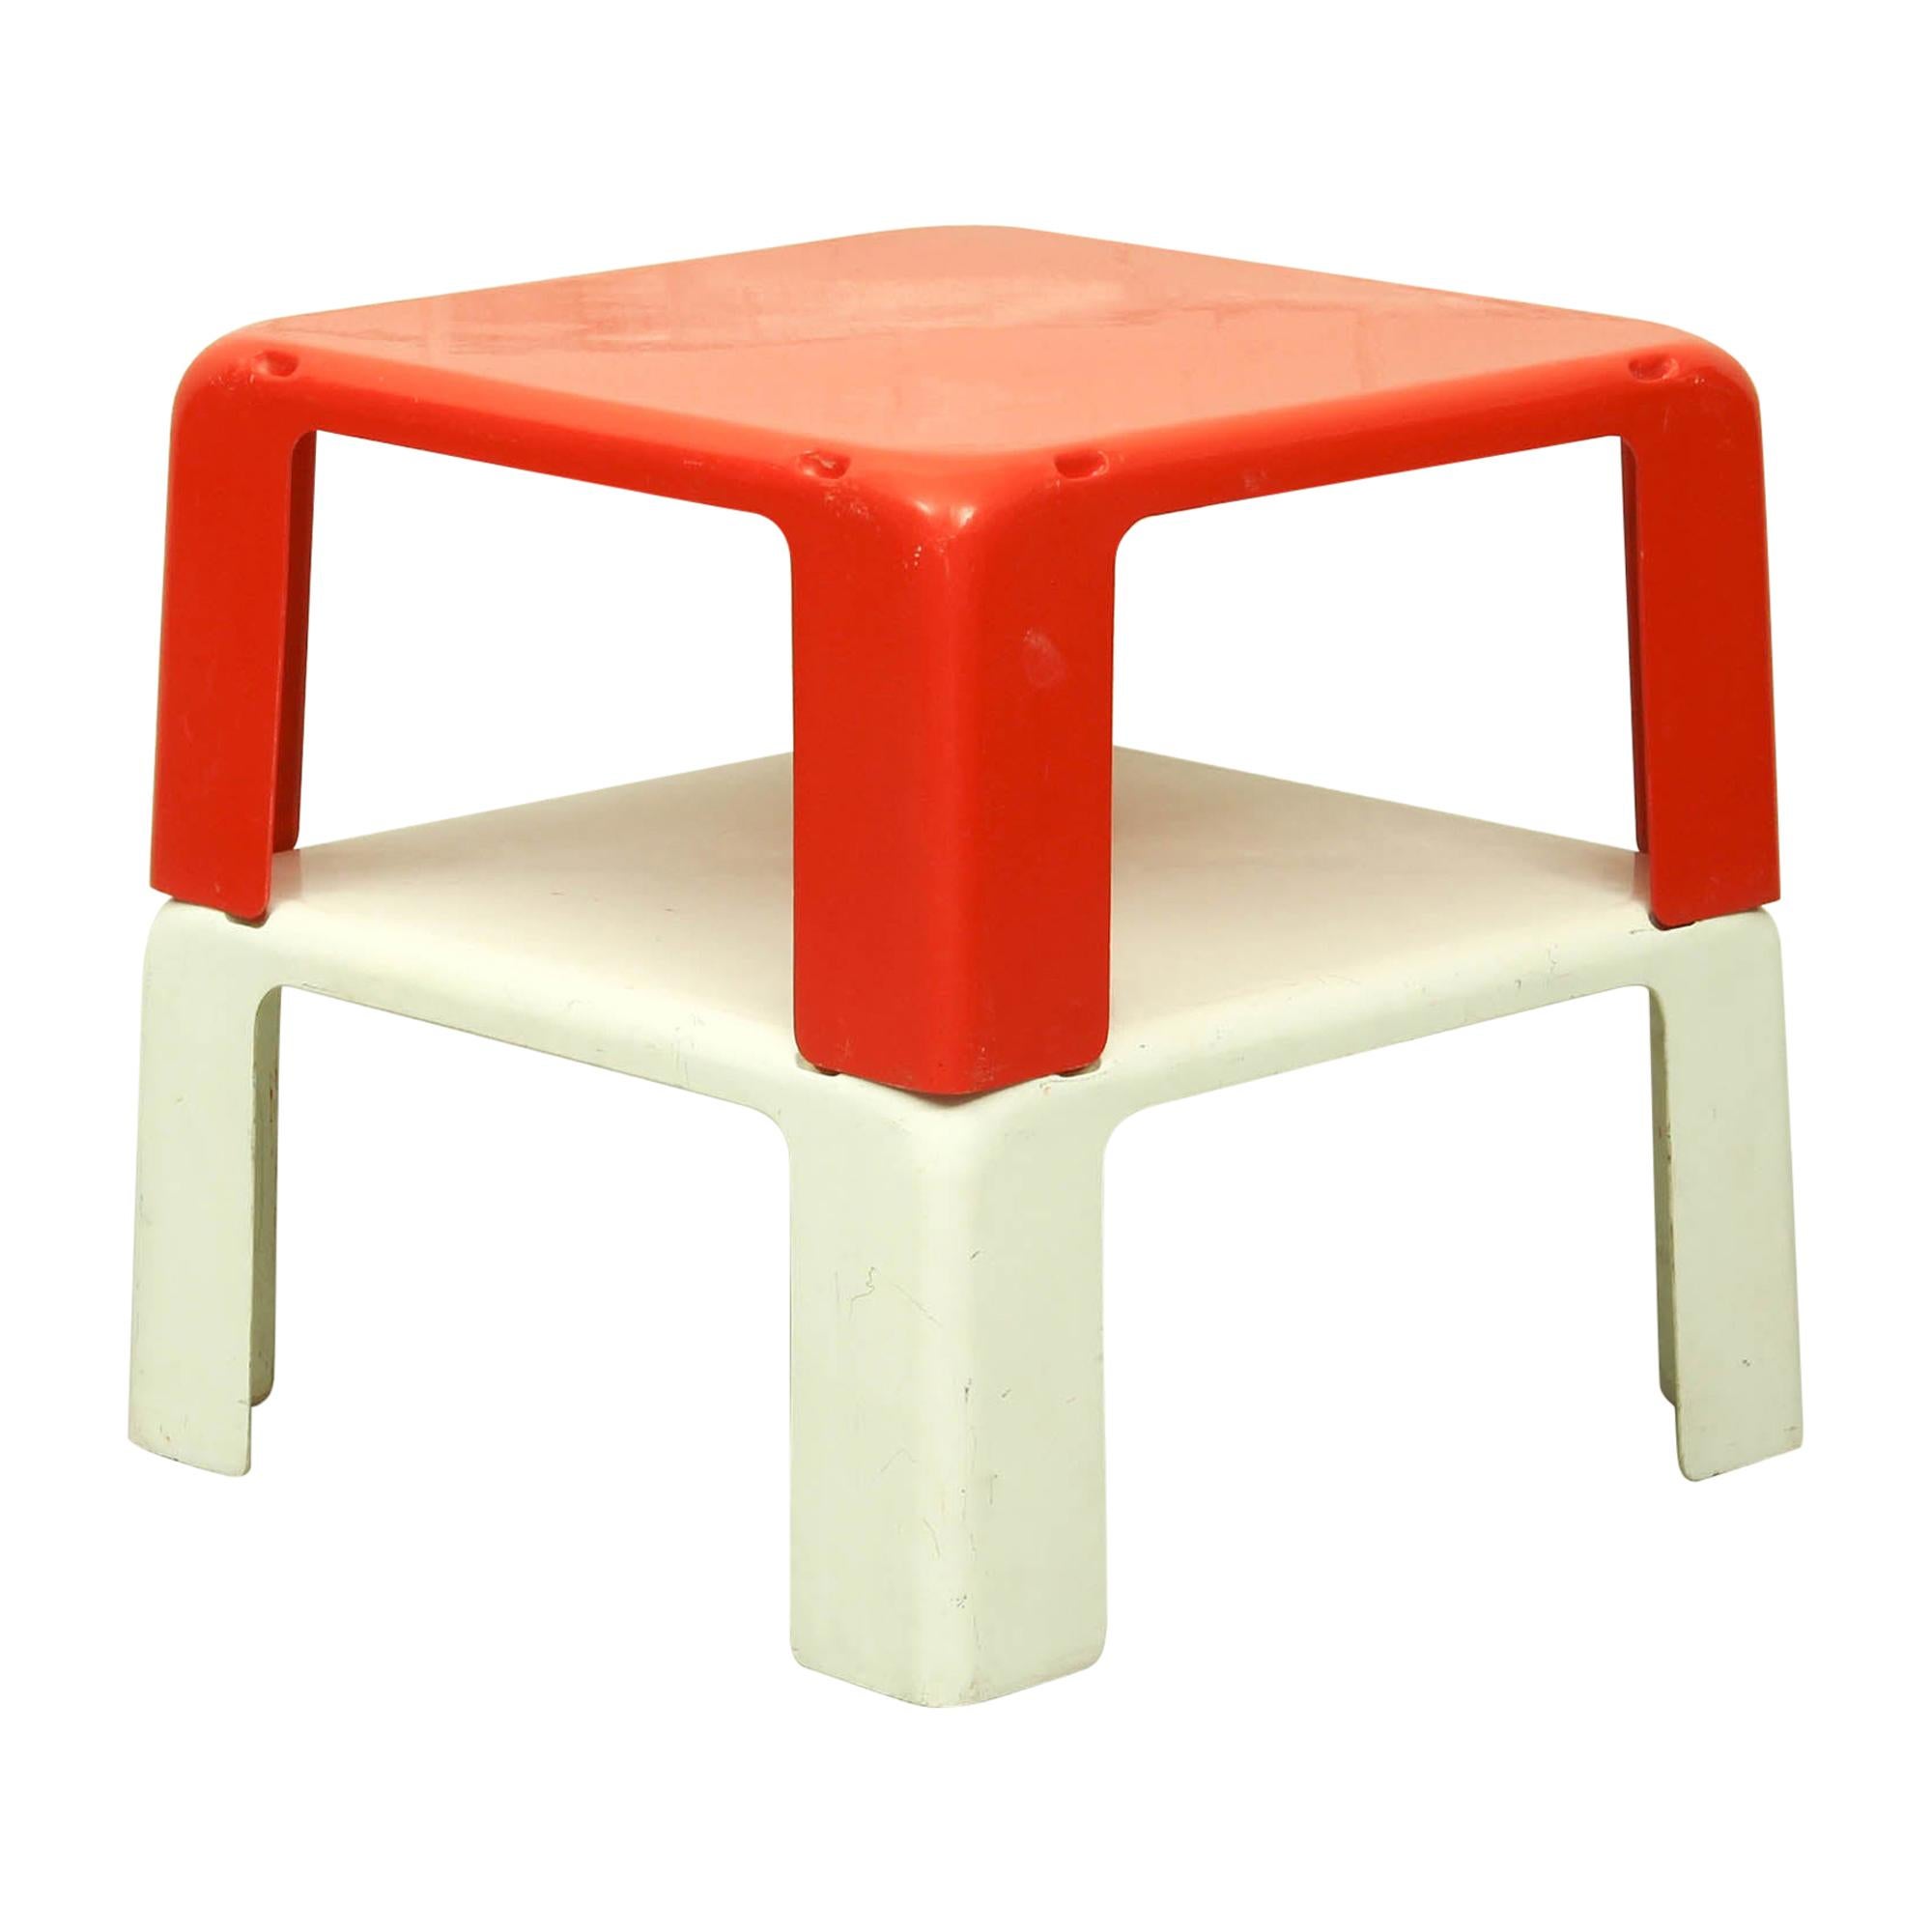 2 Plastic Sofa Tables, "Gatti" by Mario Bellini for B & B Italia / C & B Italia